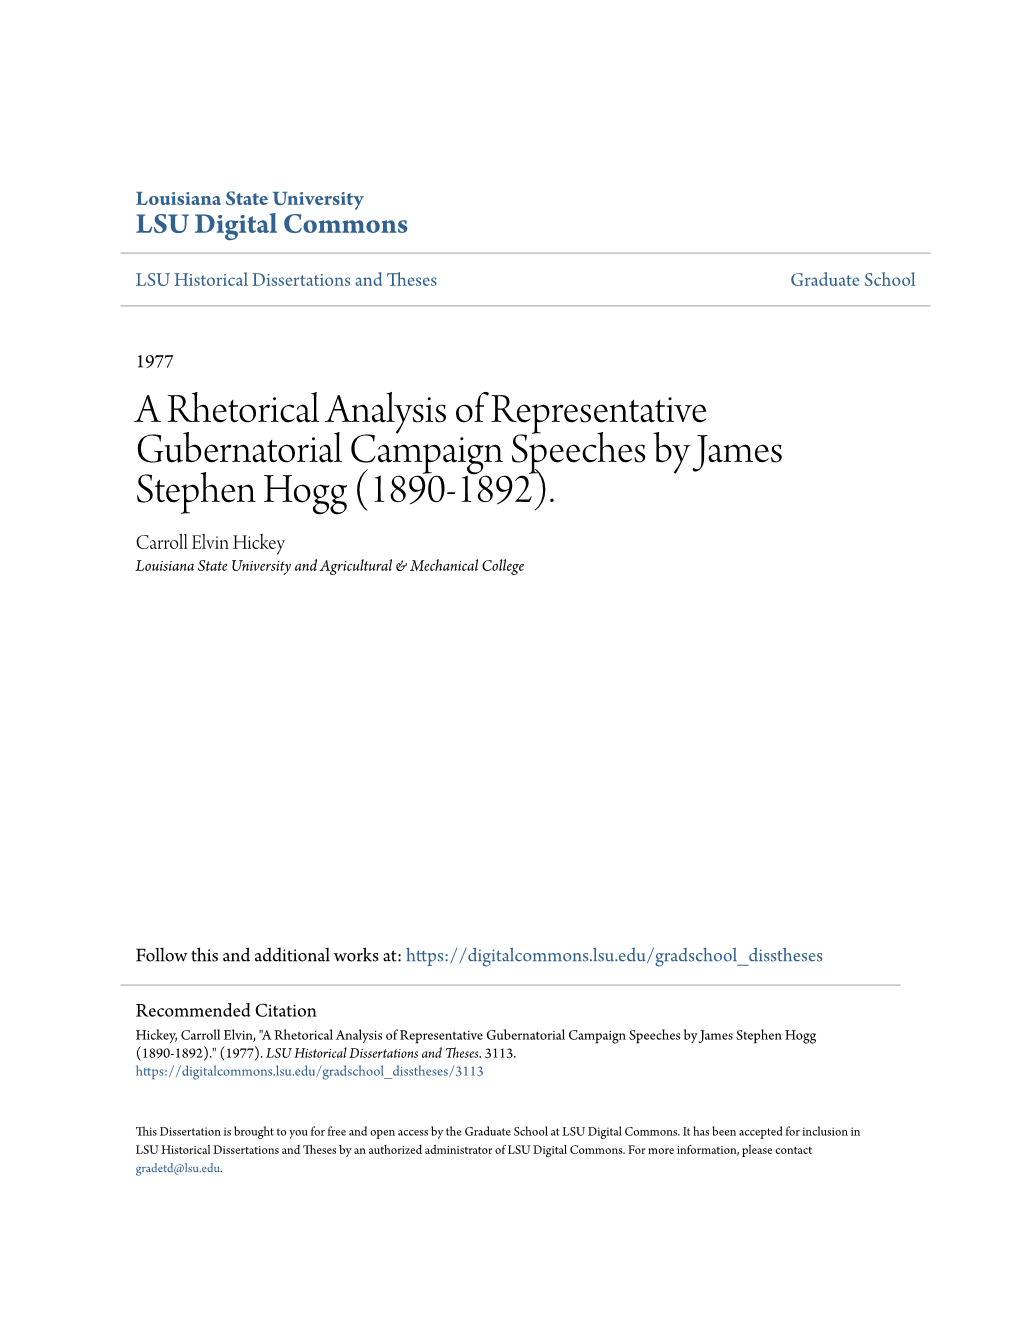 A Rhetorical Analysis of Representative Gubernatorial Campaign Speeches by James Stephen Hogg (1890-1892)